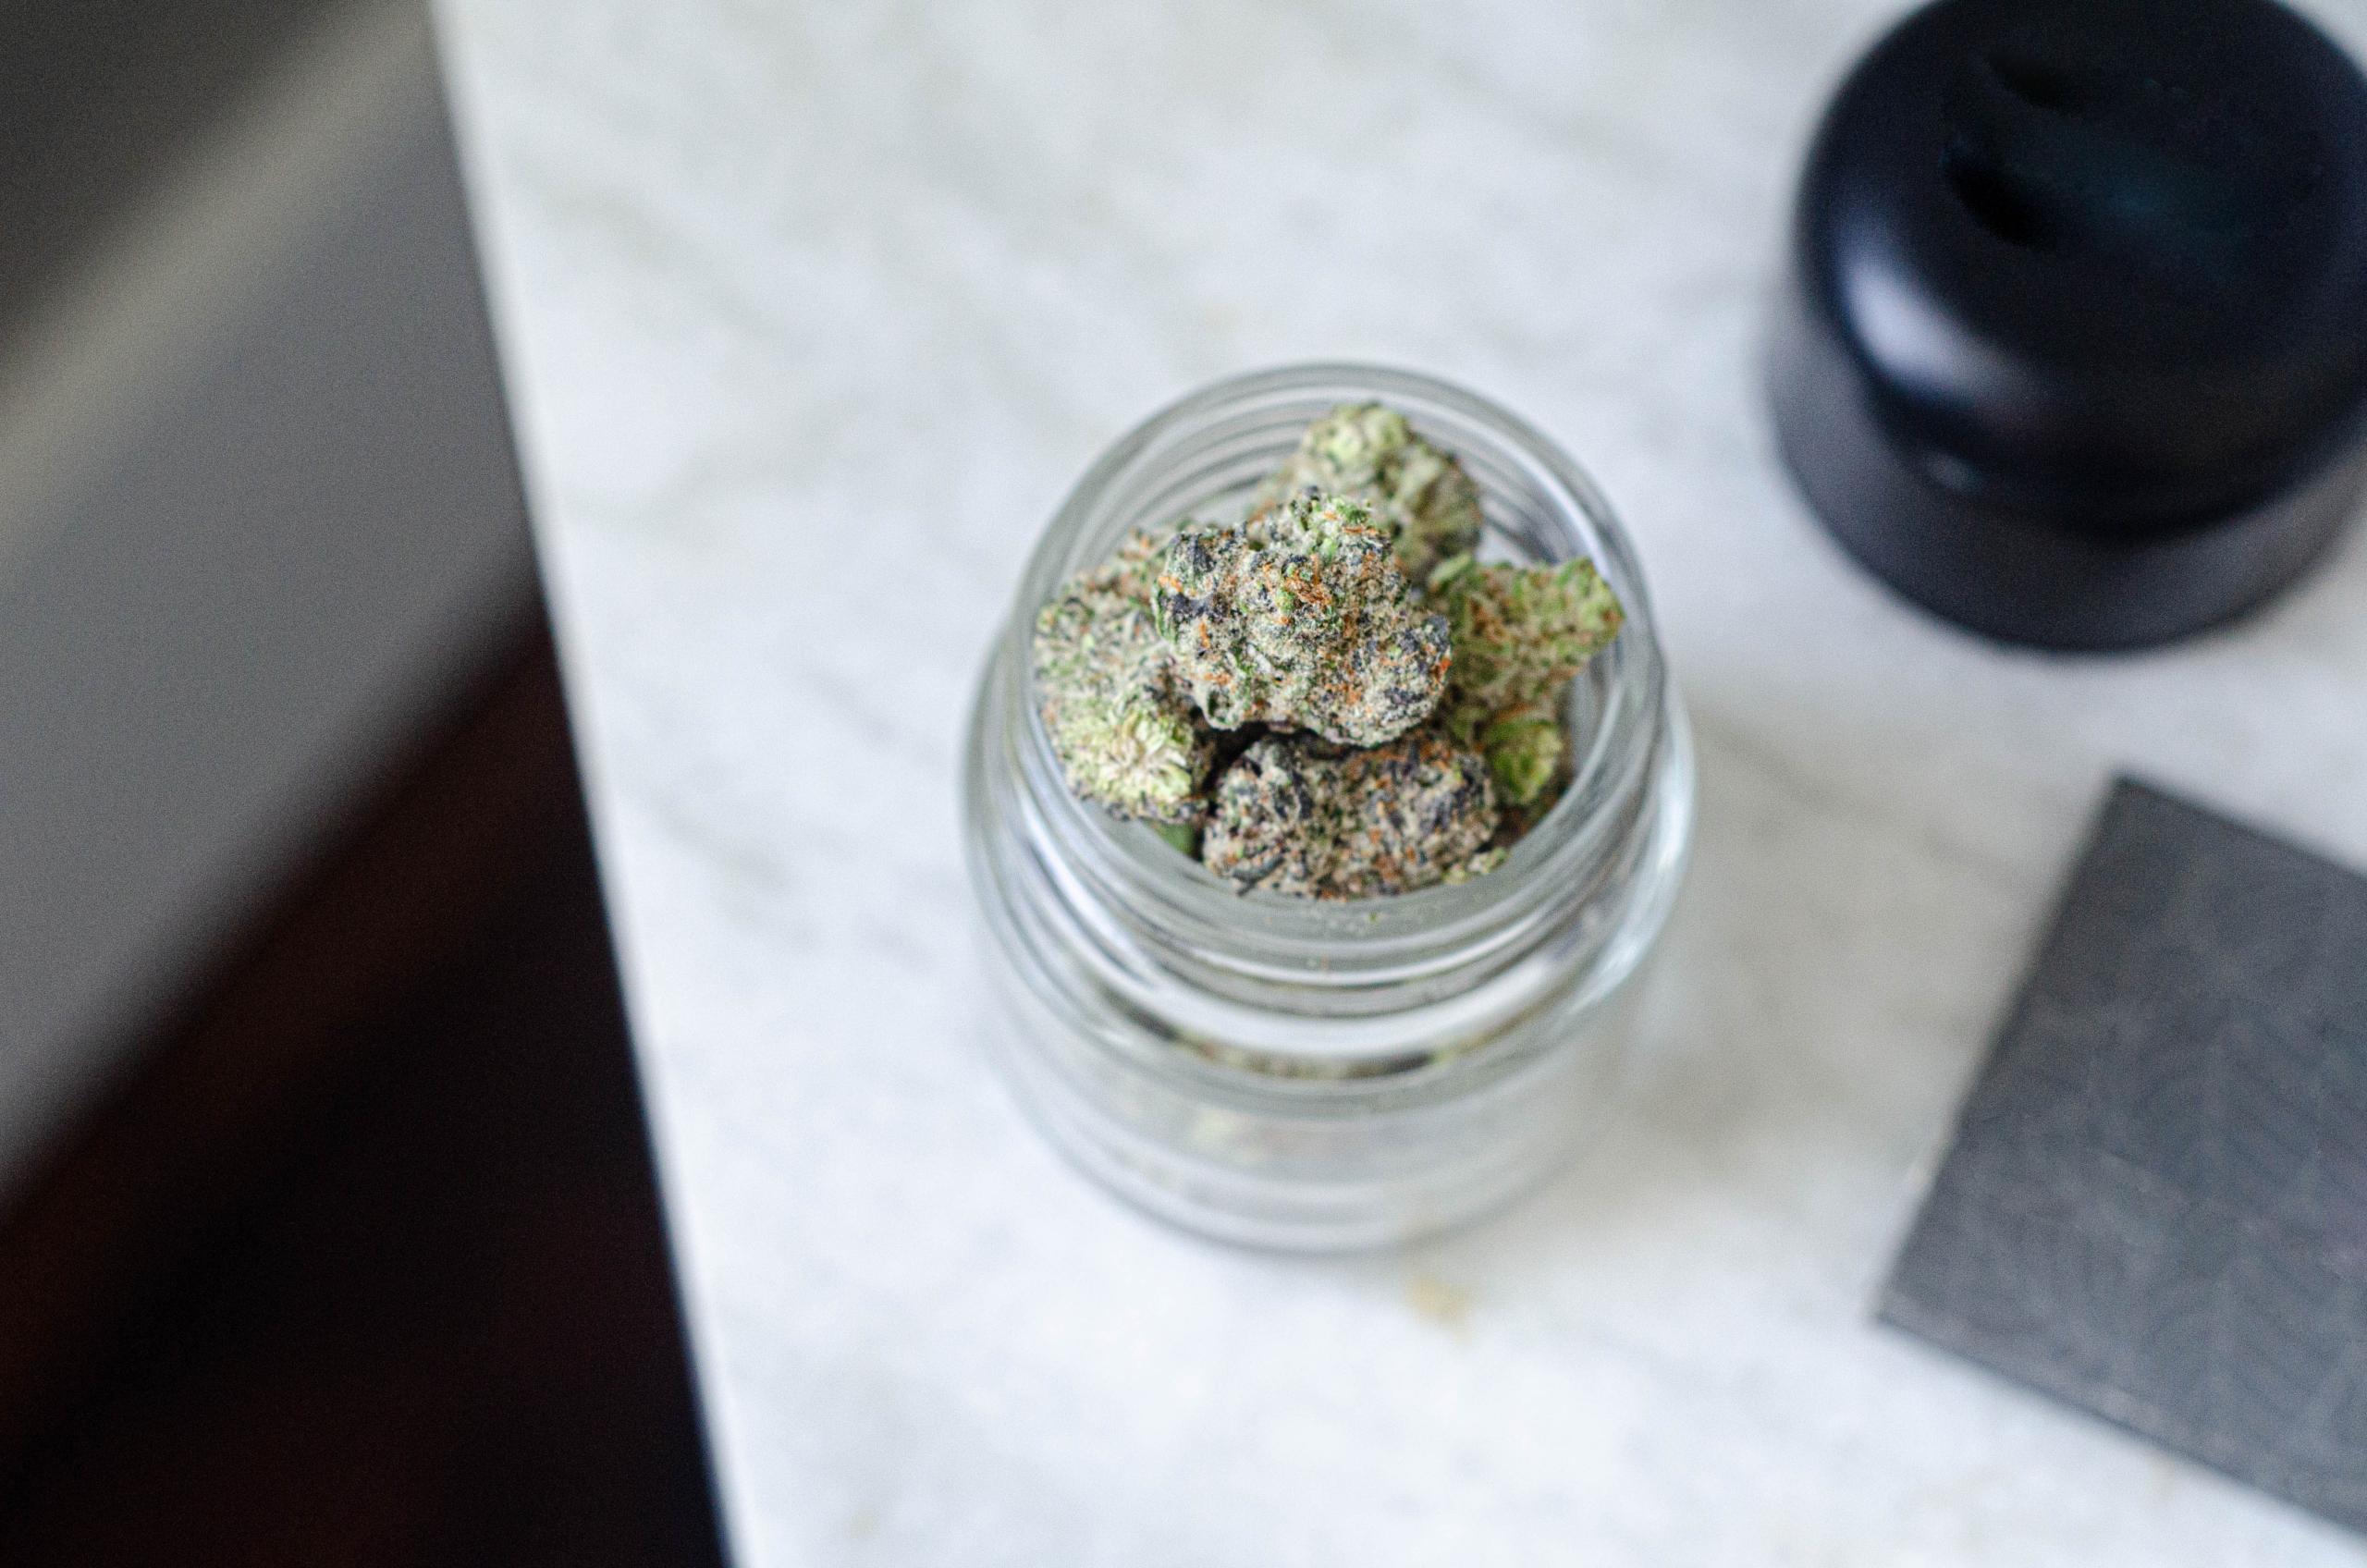 Storing Cannabis Flower